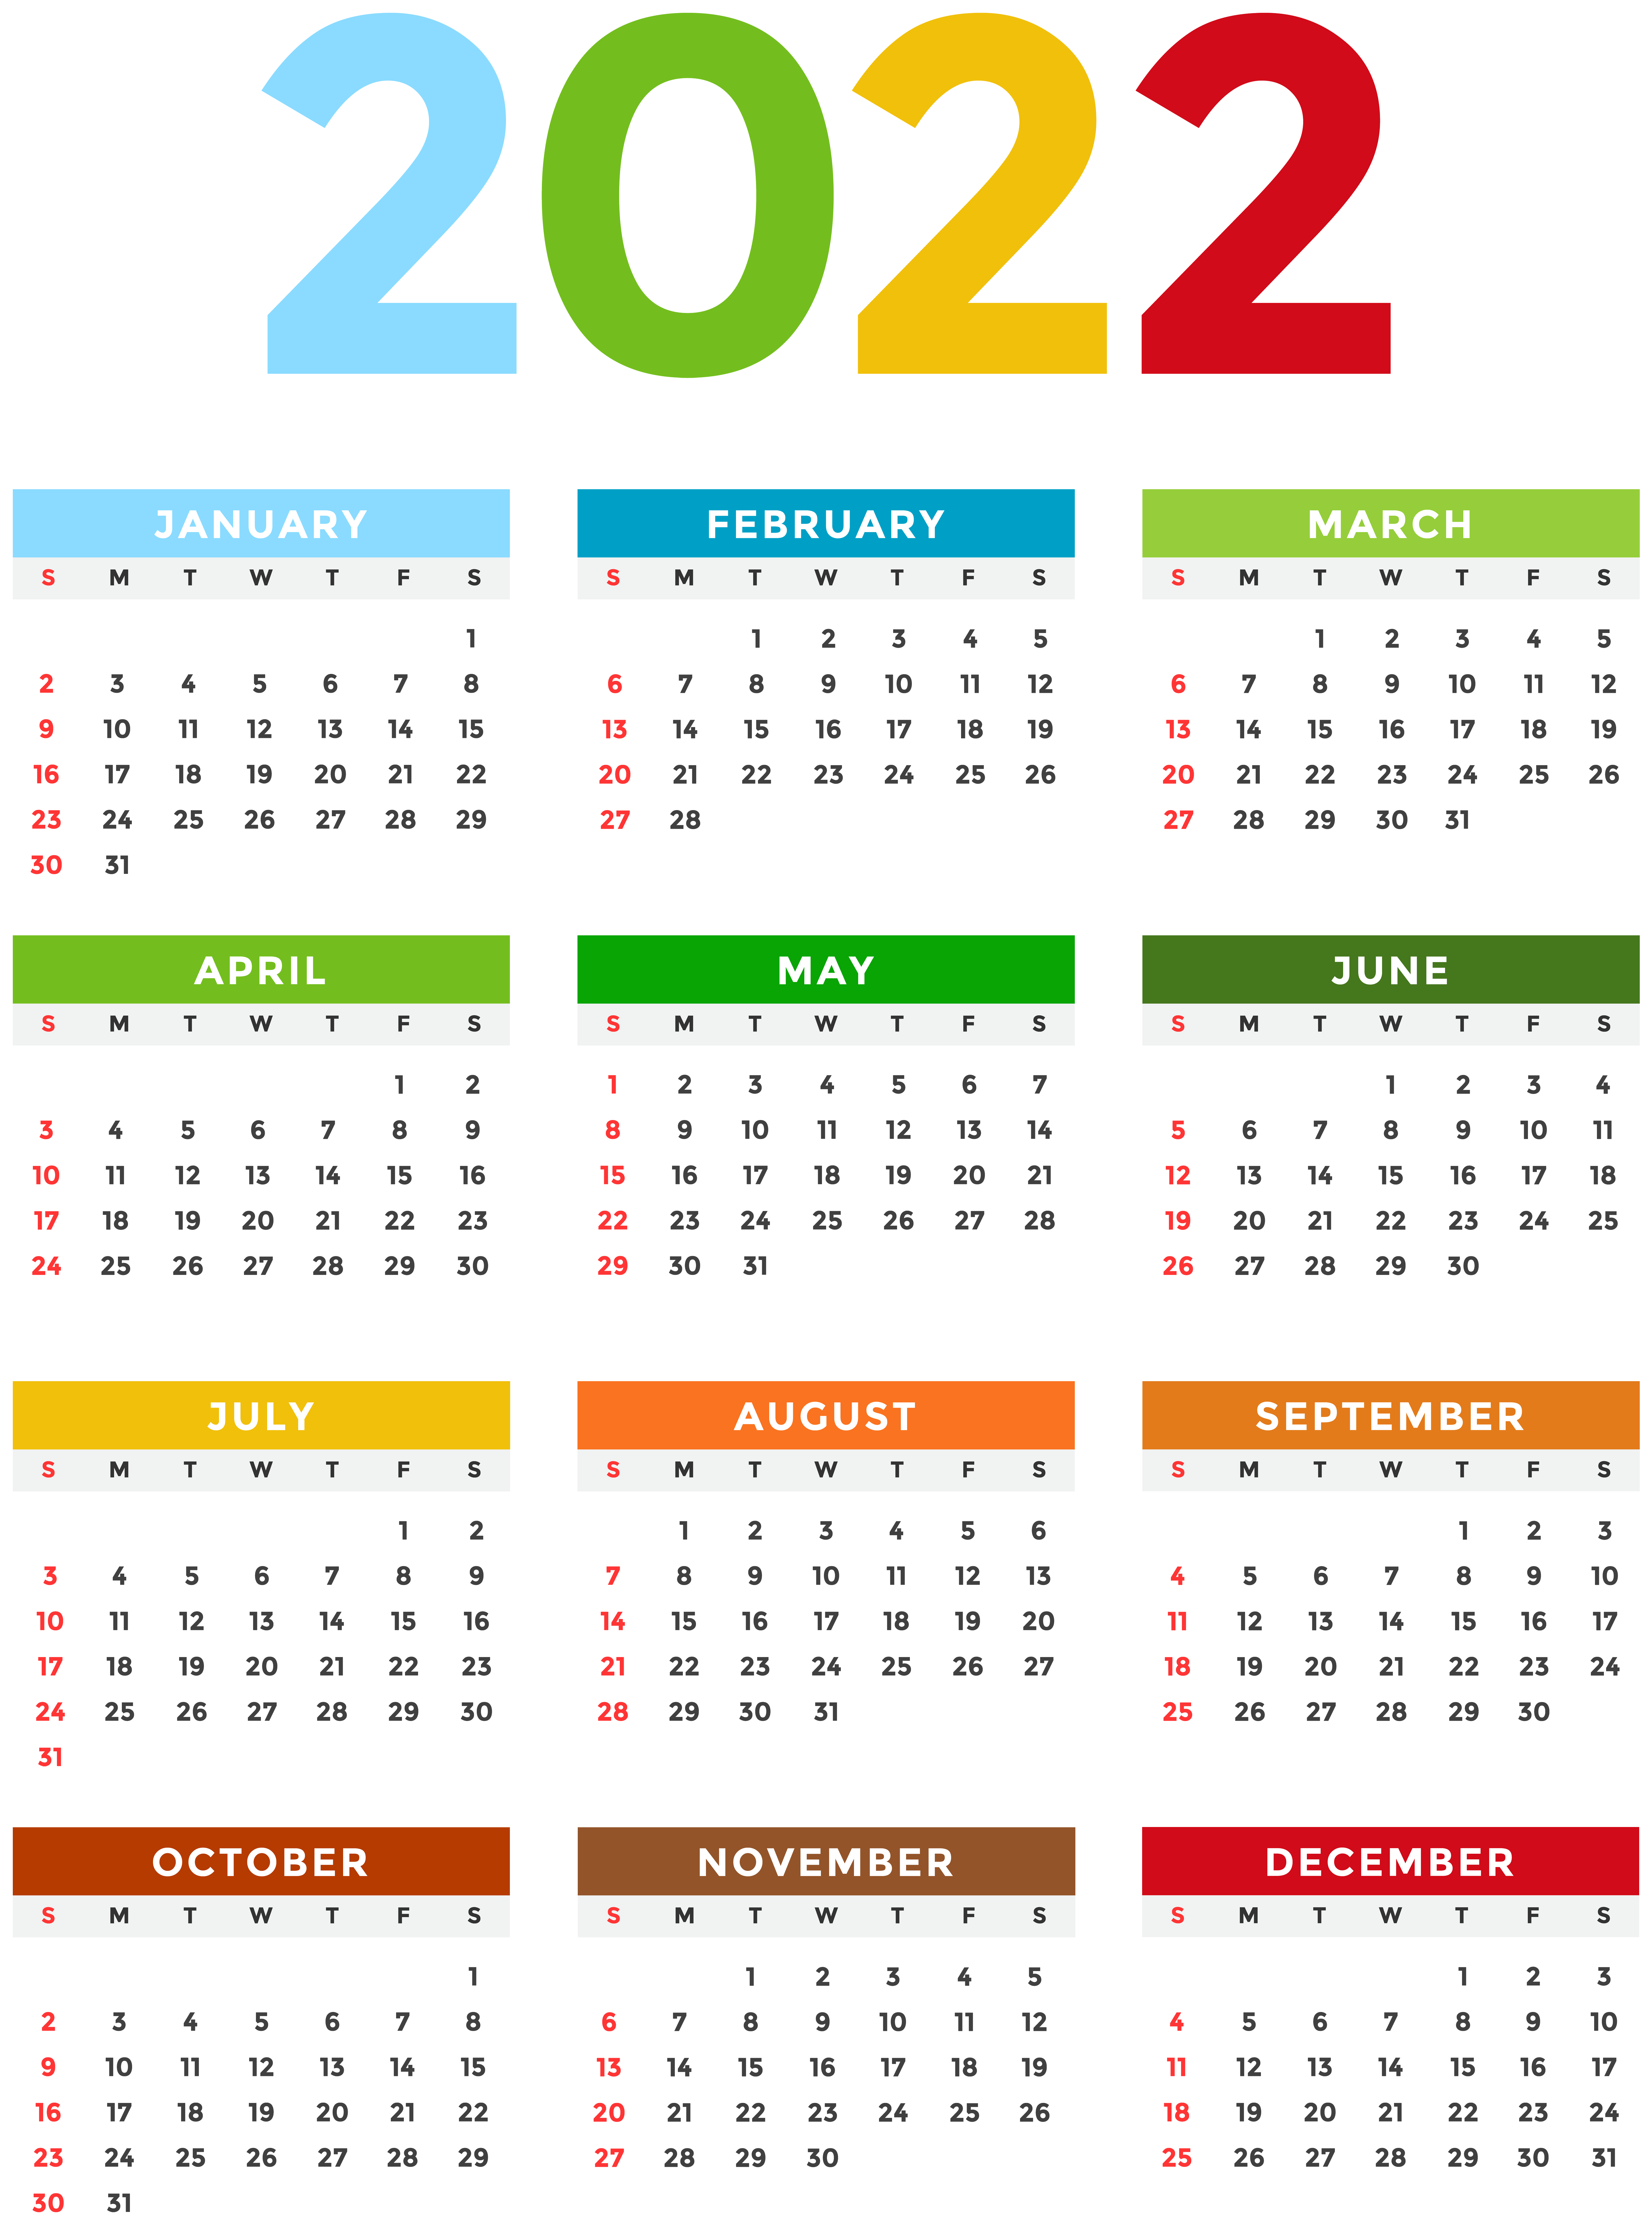 Calendar 2022 Wallpapers Wallpaper Cave